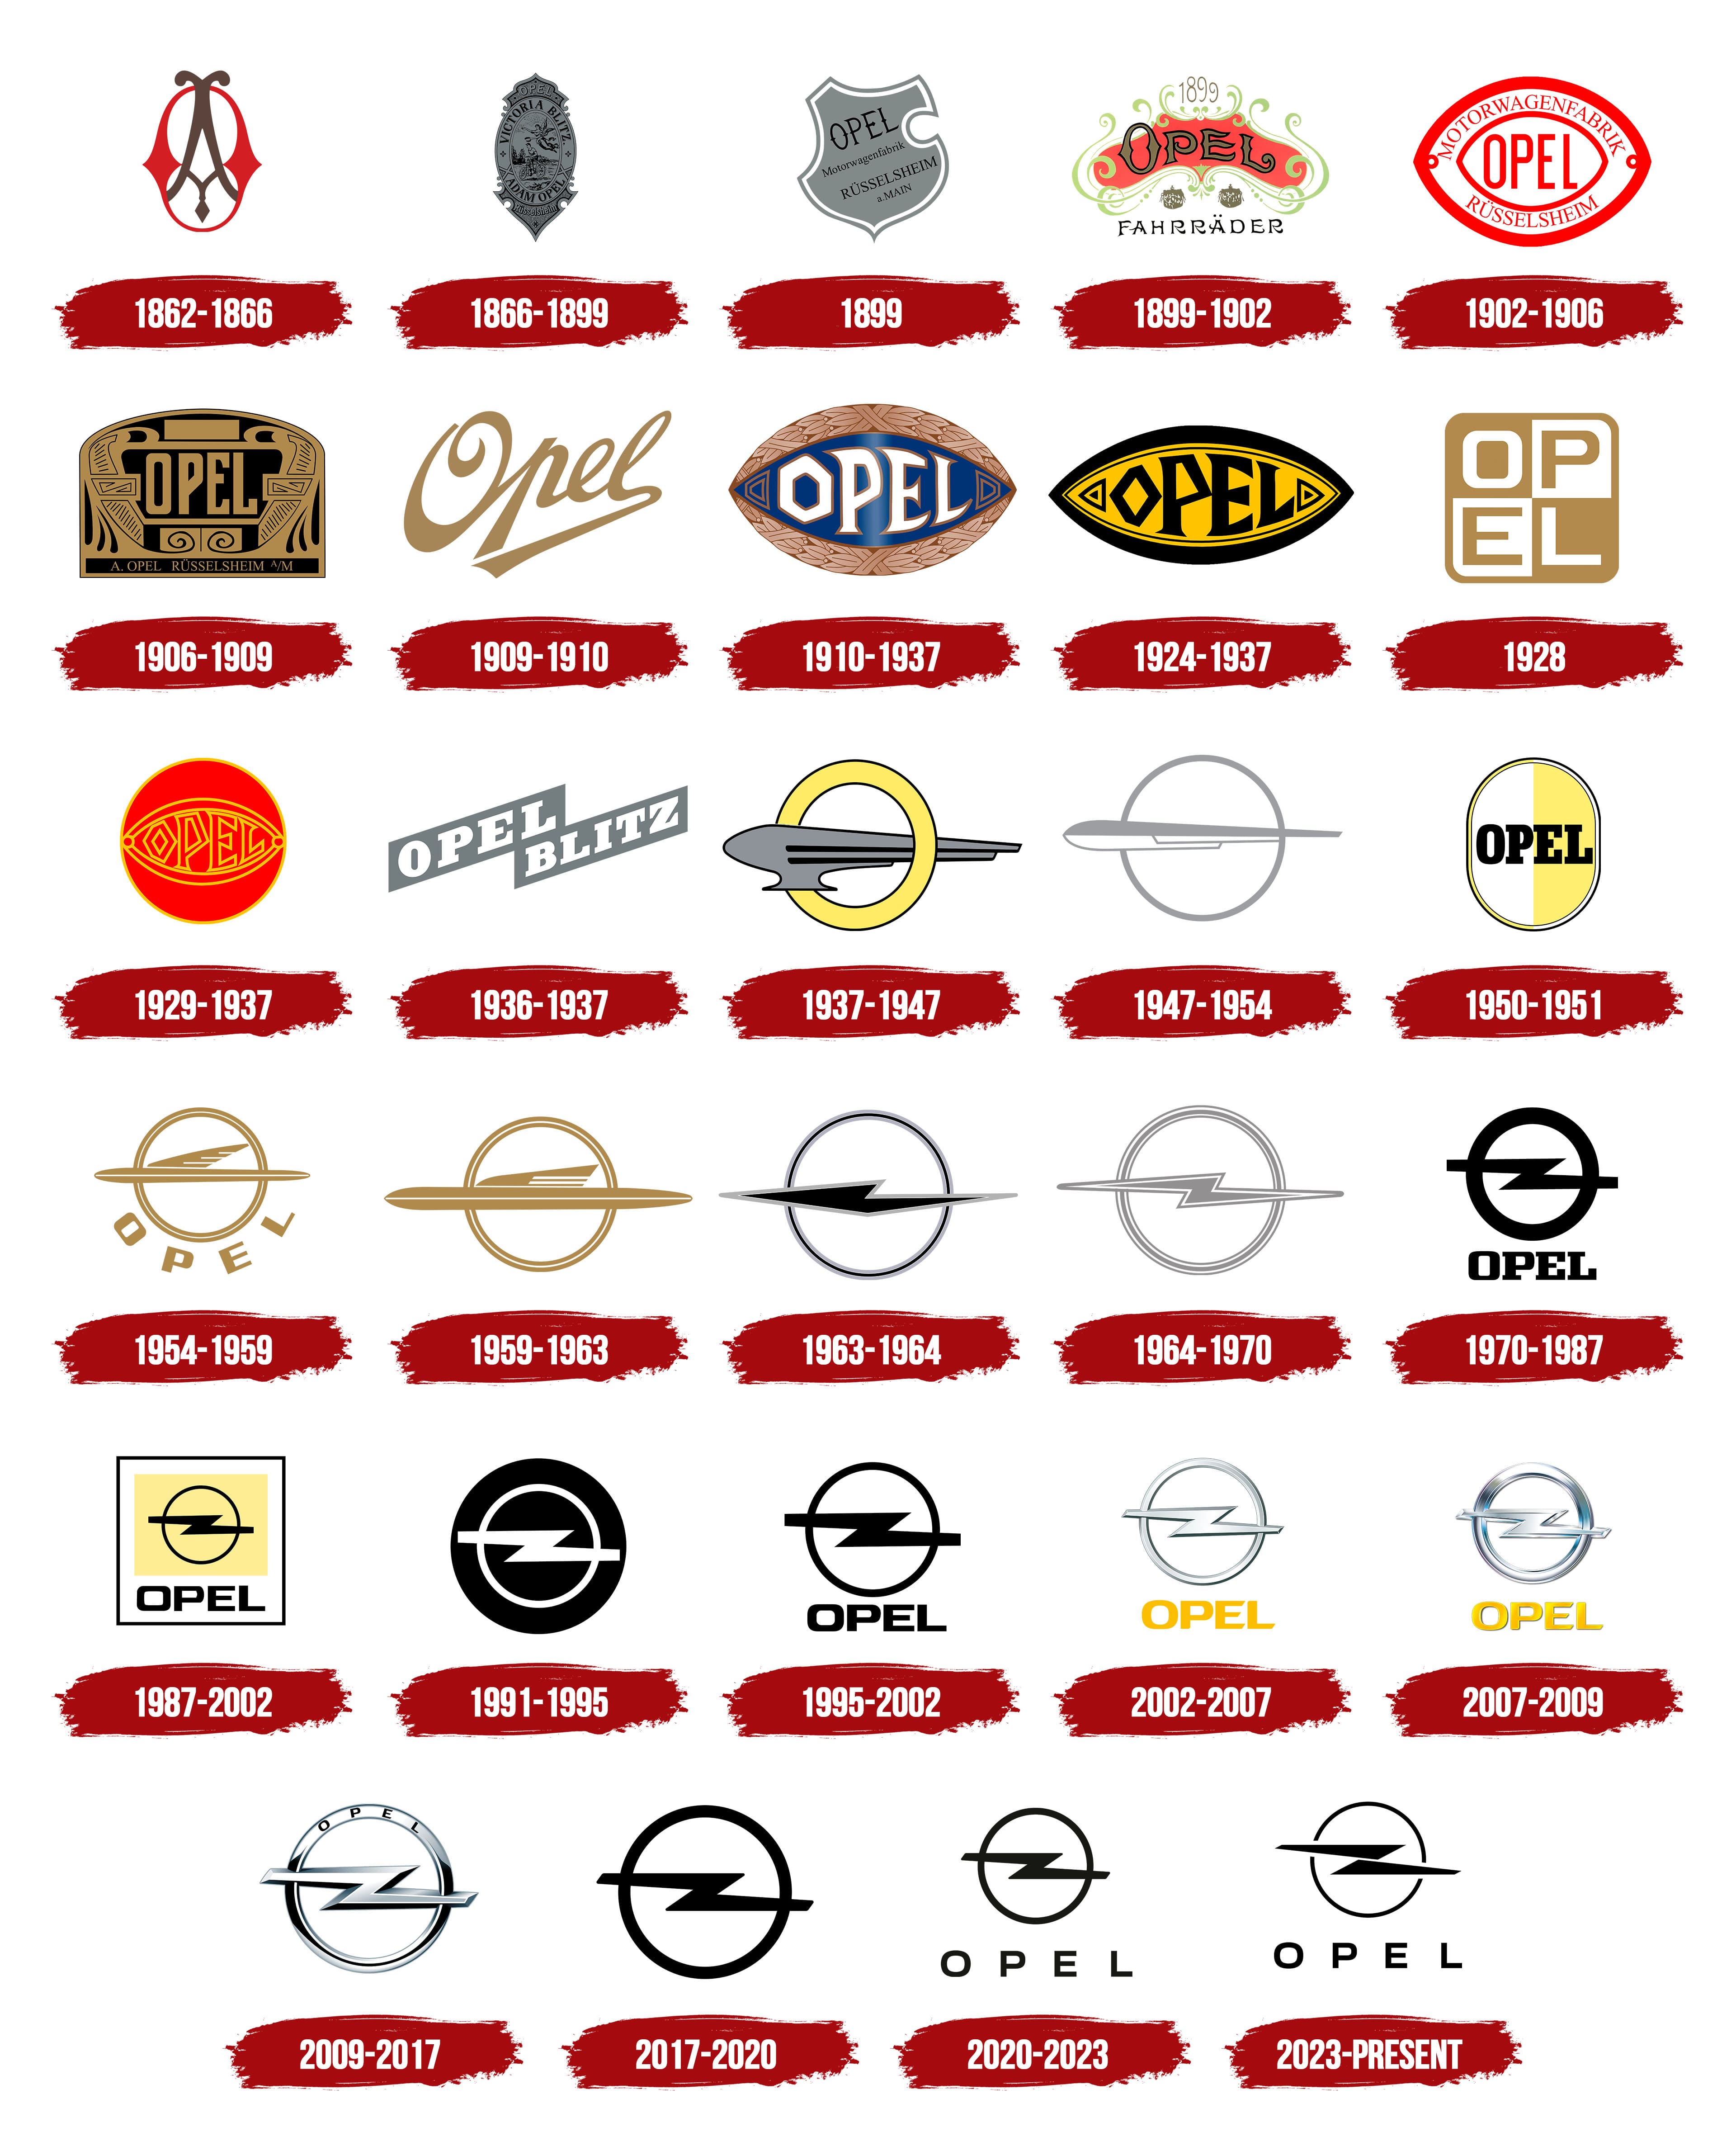 https://logos-world.net/wp-content/uploads/2021/06/Opel-Logo-History.jpg